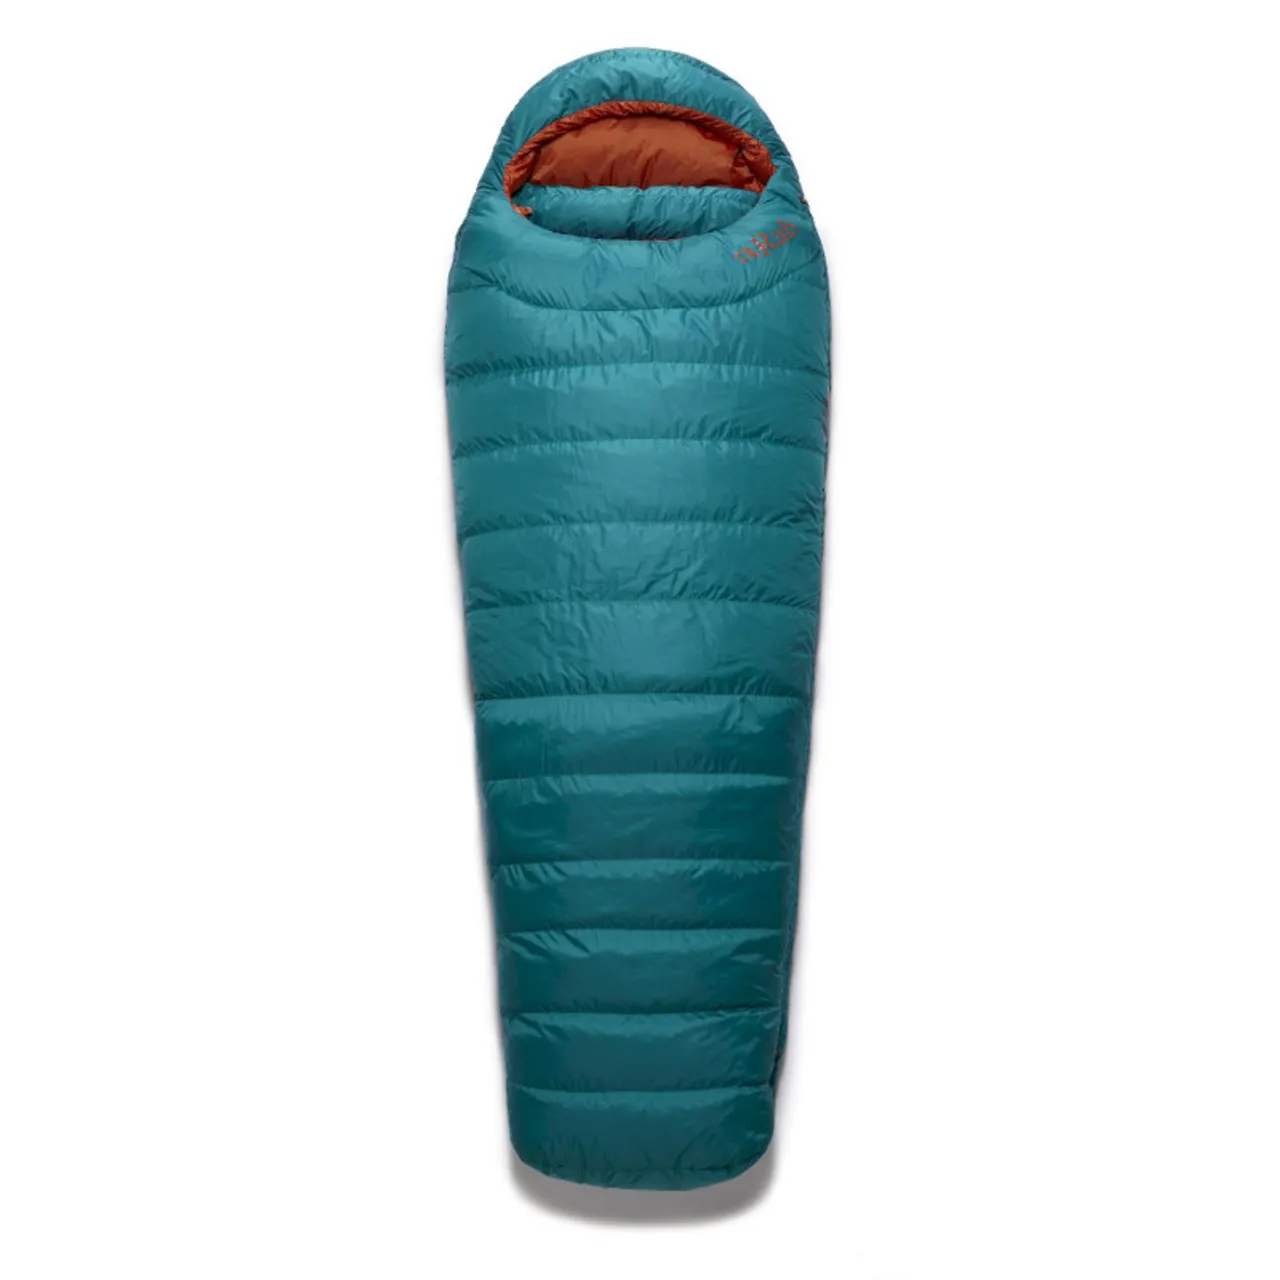 Rab Ascent 500 - Schlafsack - Damen Marina Blue Regular - linke Öffnung